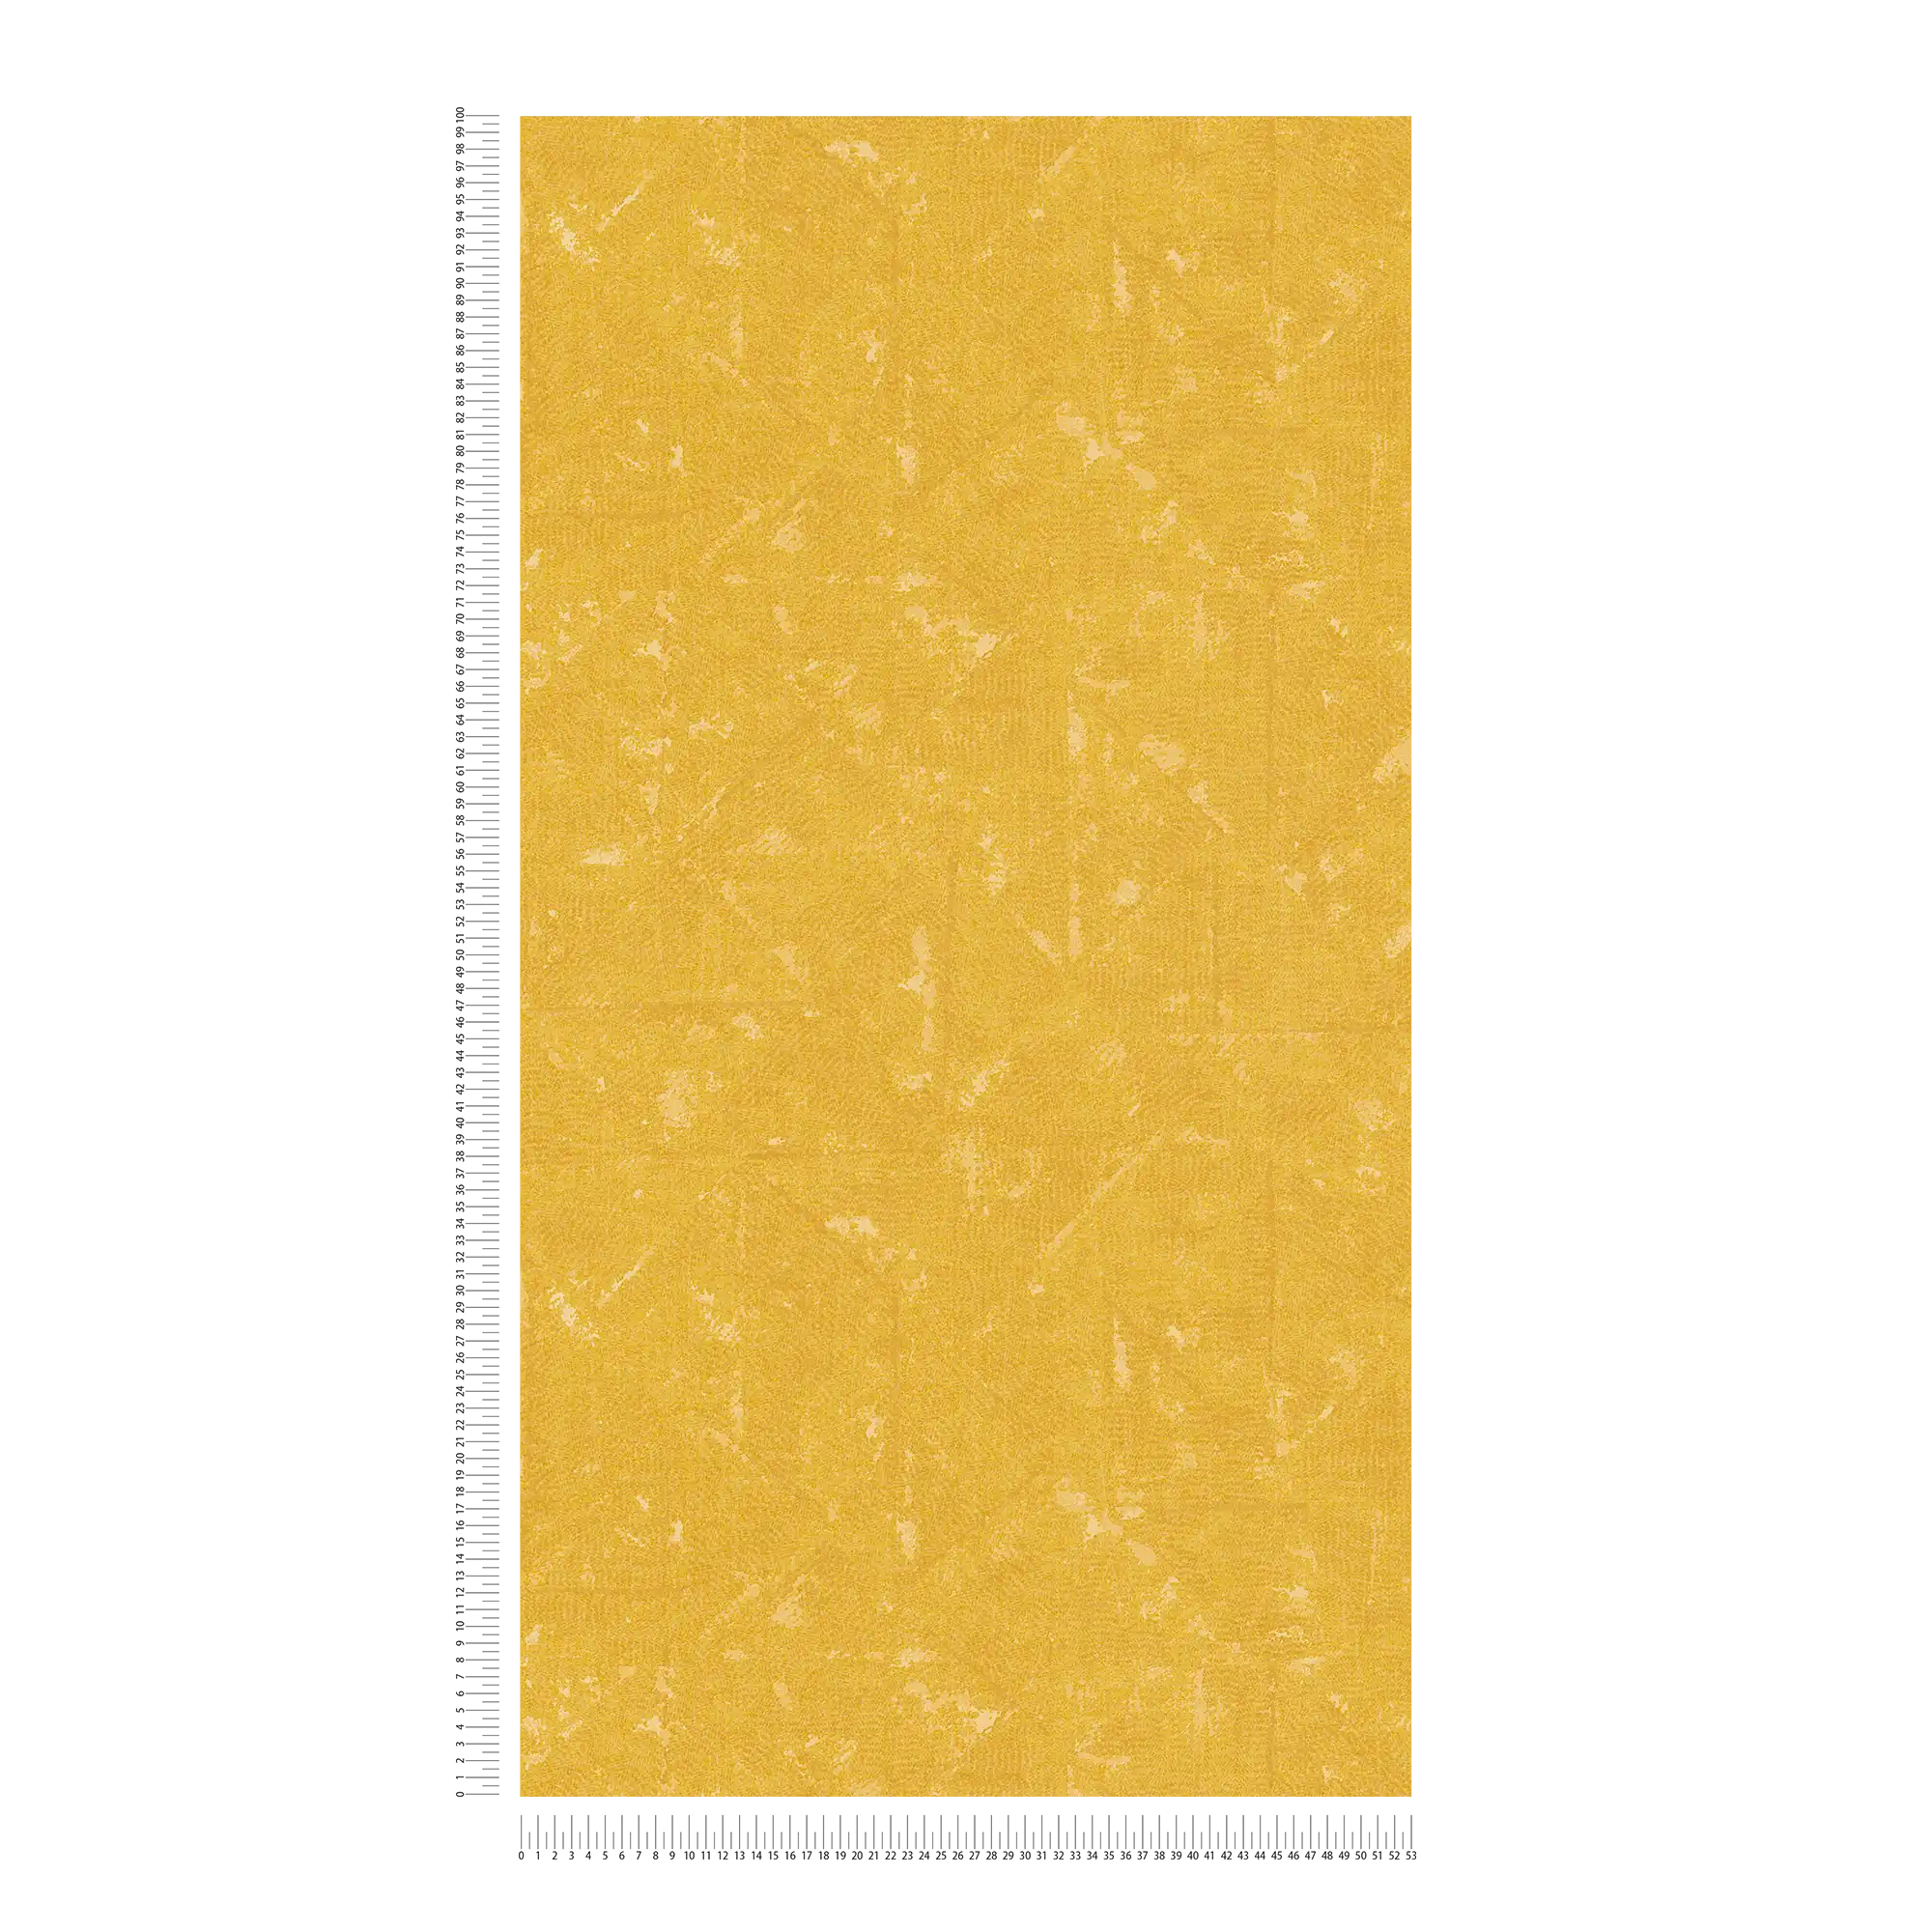             Behang zomer geel, asymmetrisch patroon - Geel
        